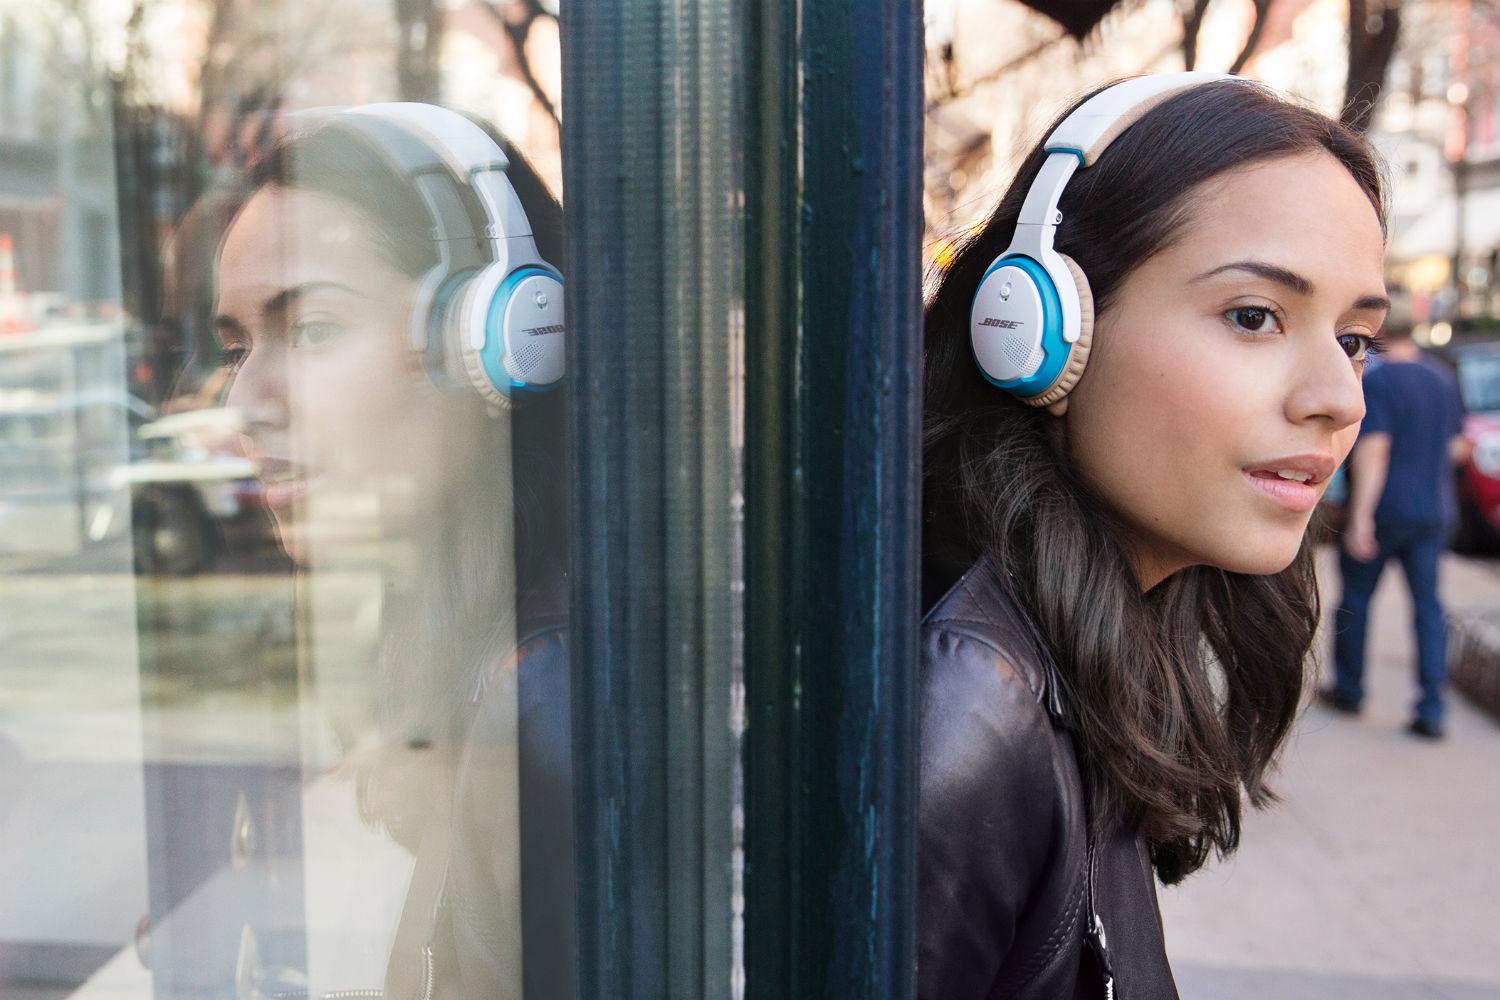 Bose bolsters its Soundlink line with speaker, on-ear cans | Digital Trends